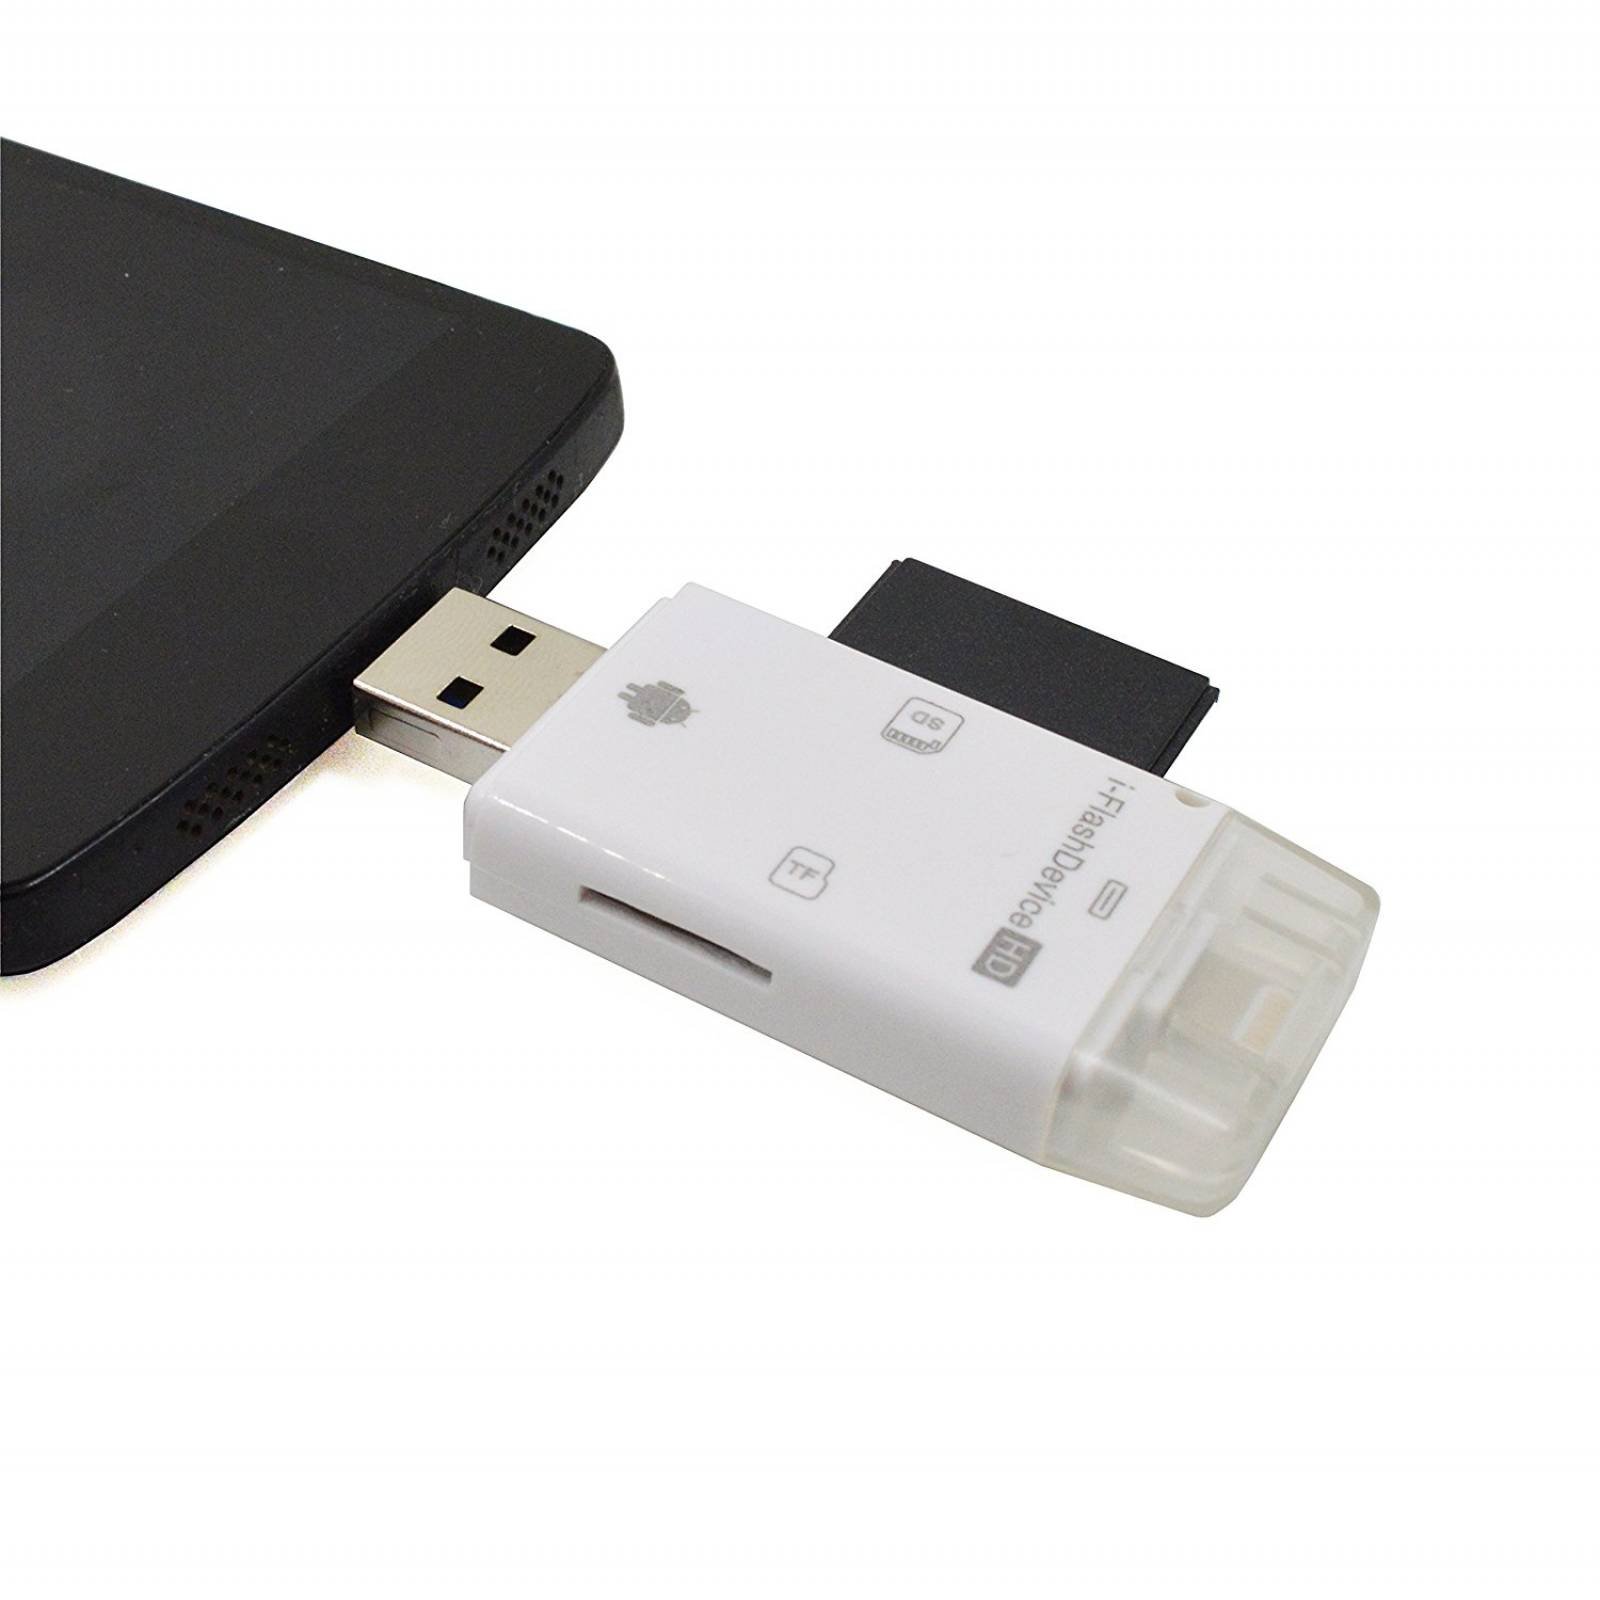 B:YiKaiEn 3 1 lector pendrive USB Micro SD SDHC TF lector tarj